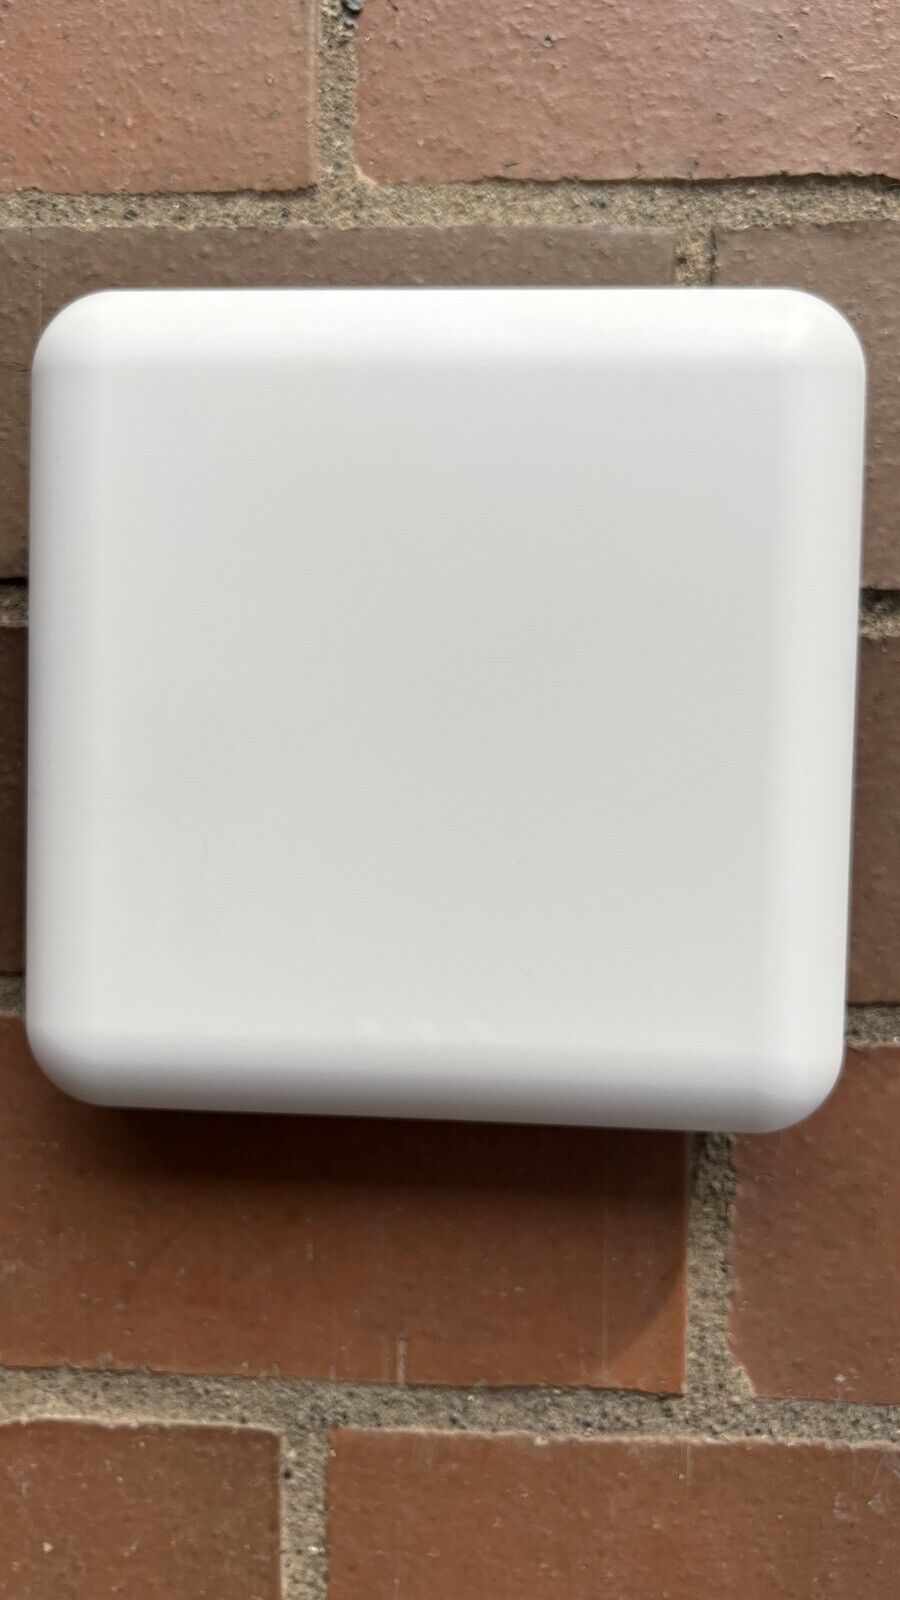 Luxul XAP-1510 - AC1900 Wireless Access Point